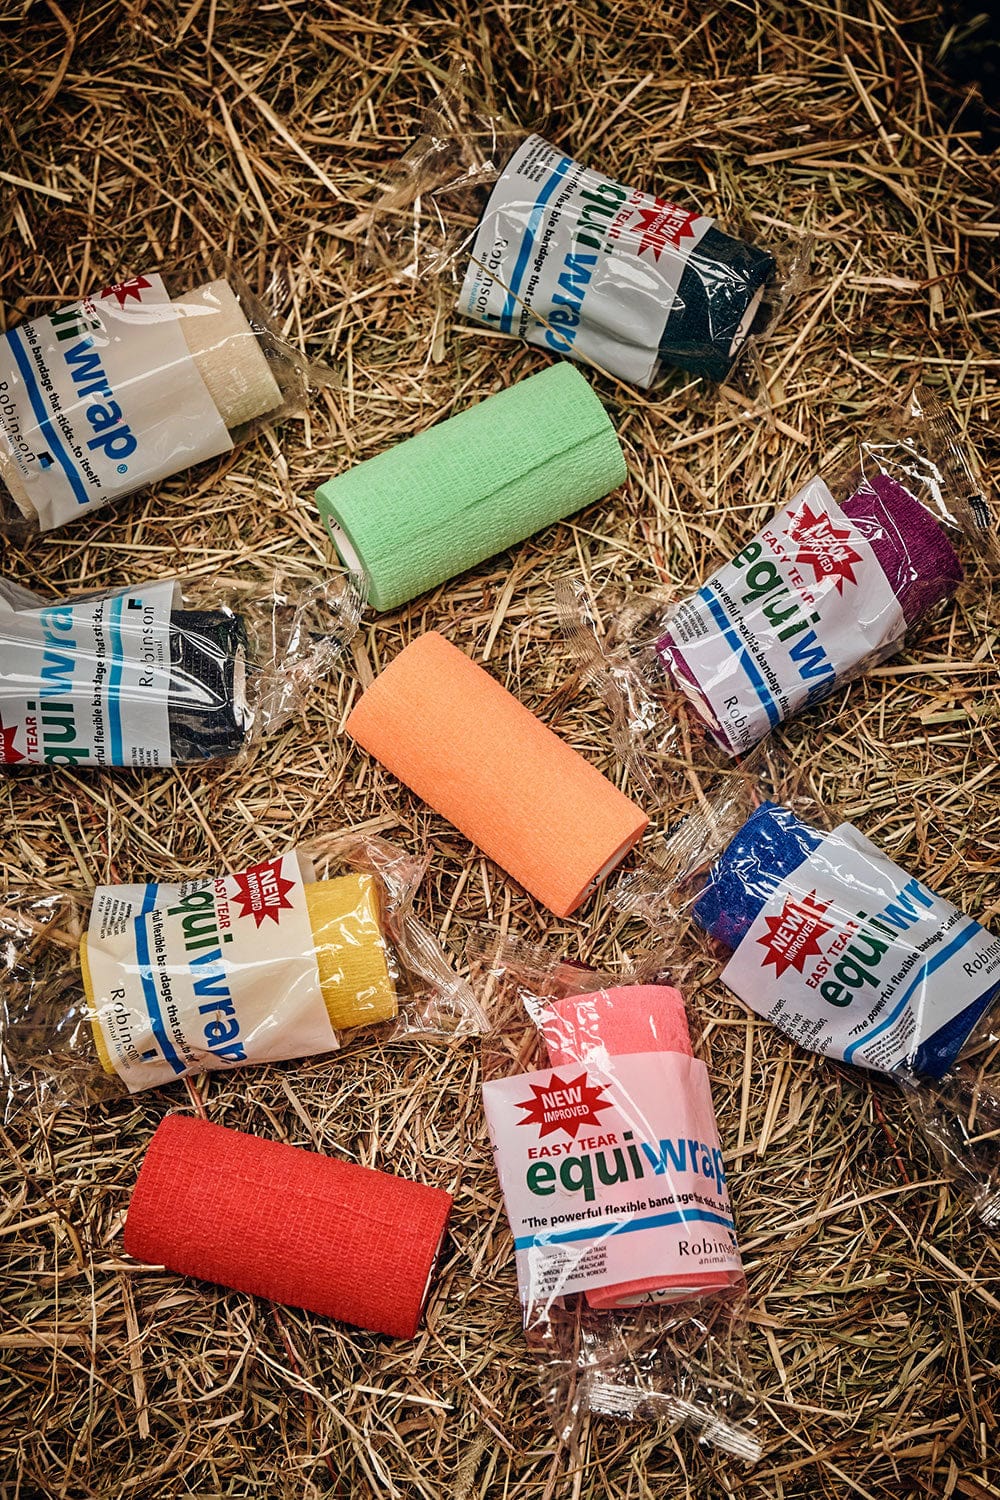 Equiwrap bandage 24 pack